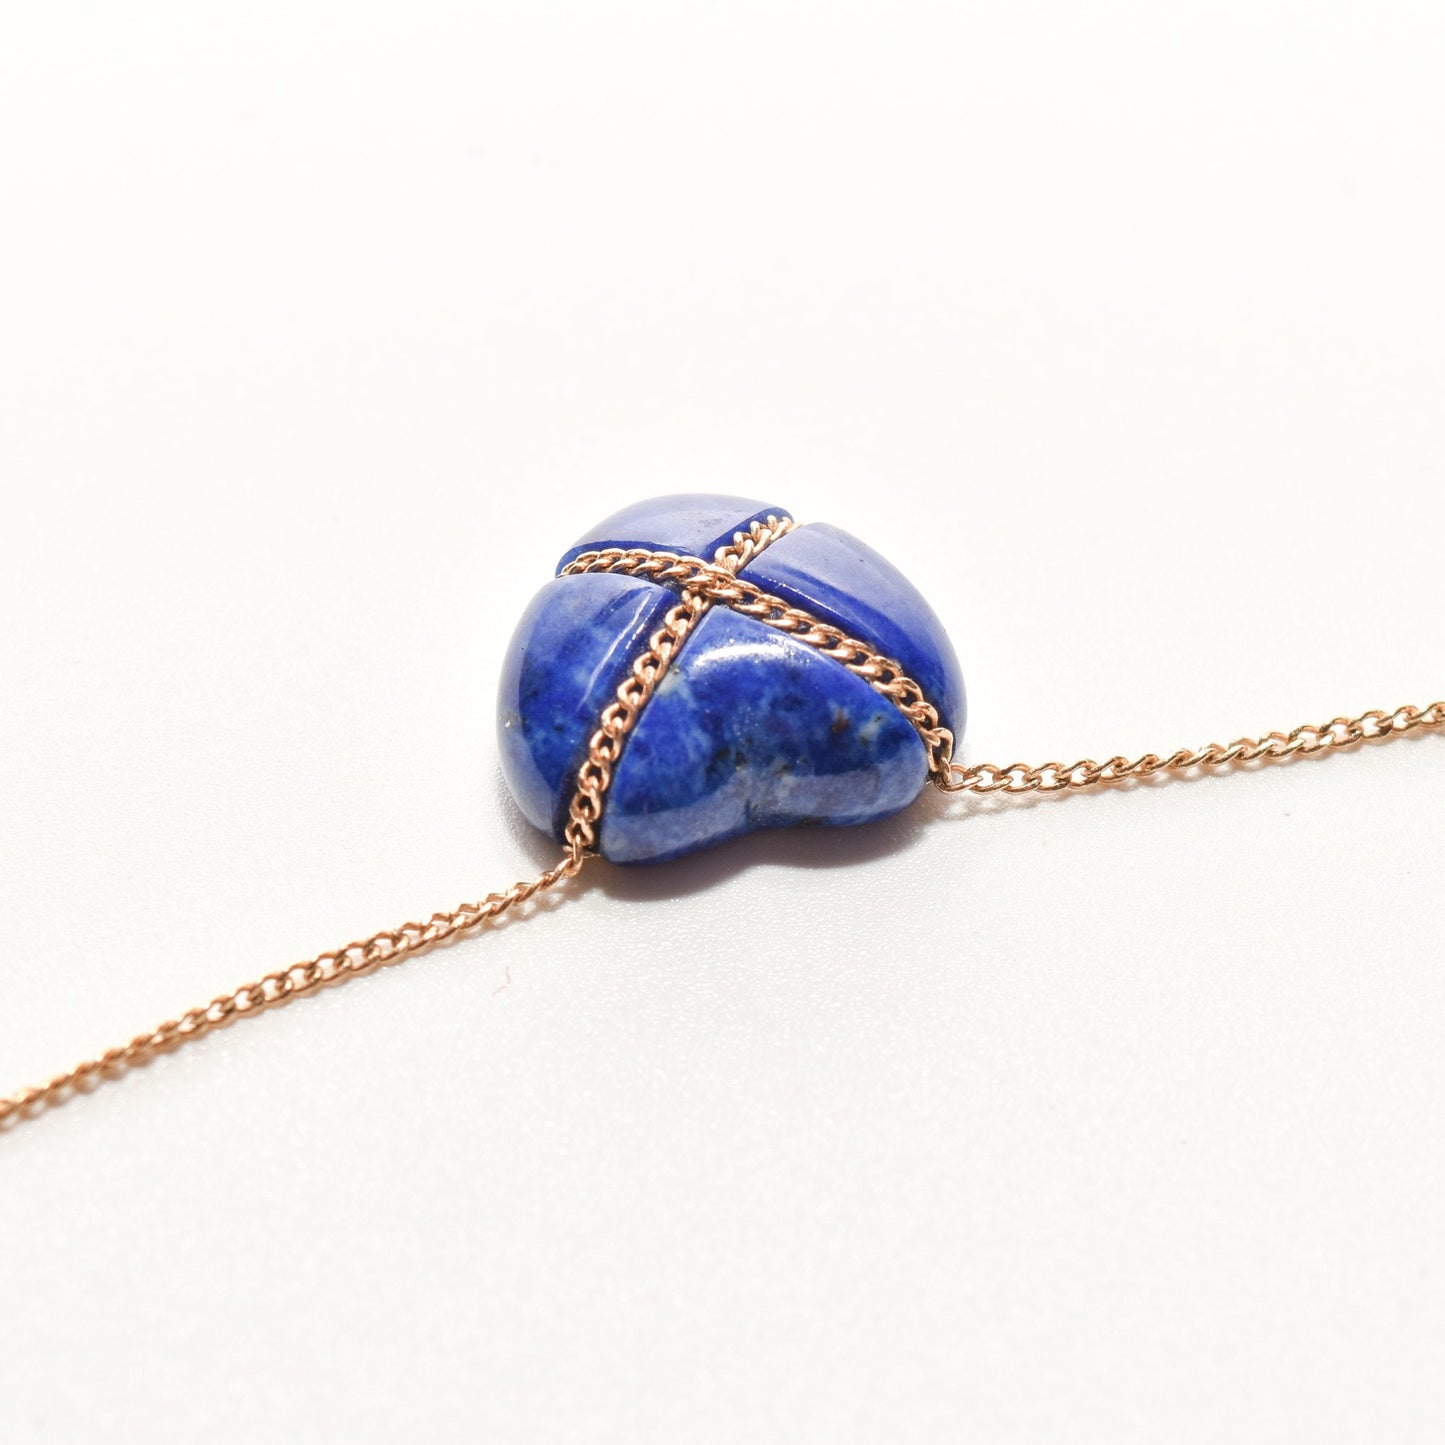 14K gold Tiffany & Co. lapis lazuli heart cross pendant on minimalist gemstone necklace against a white background